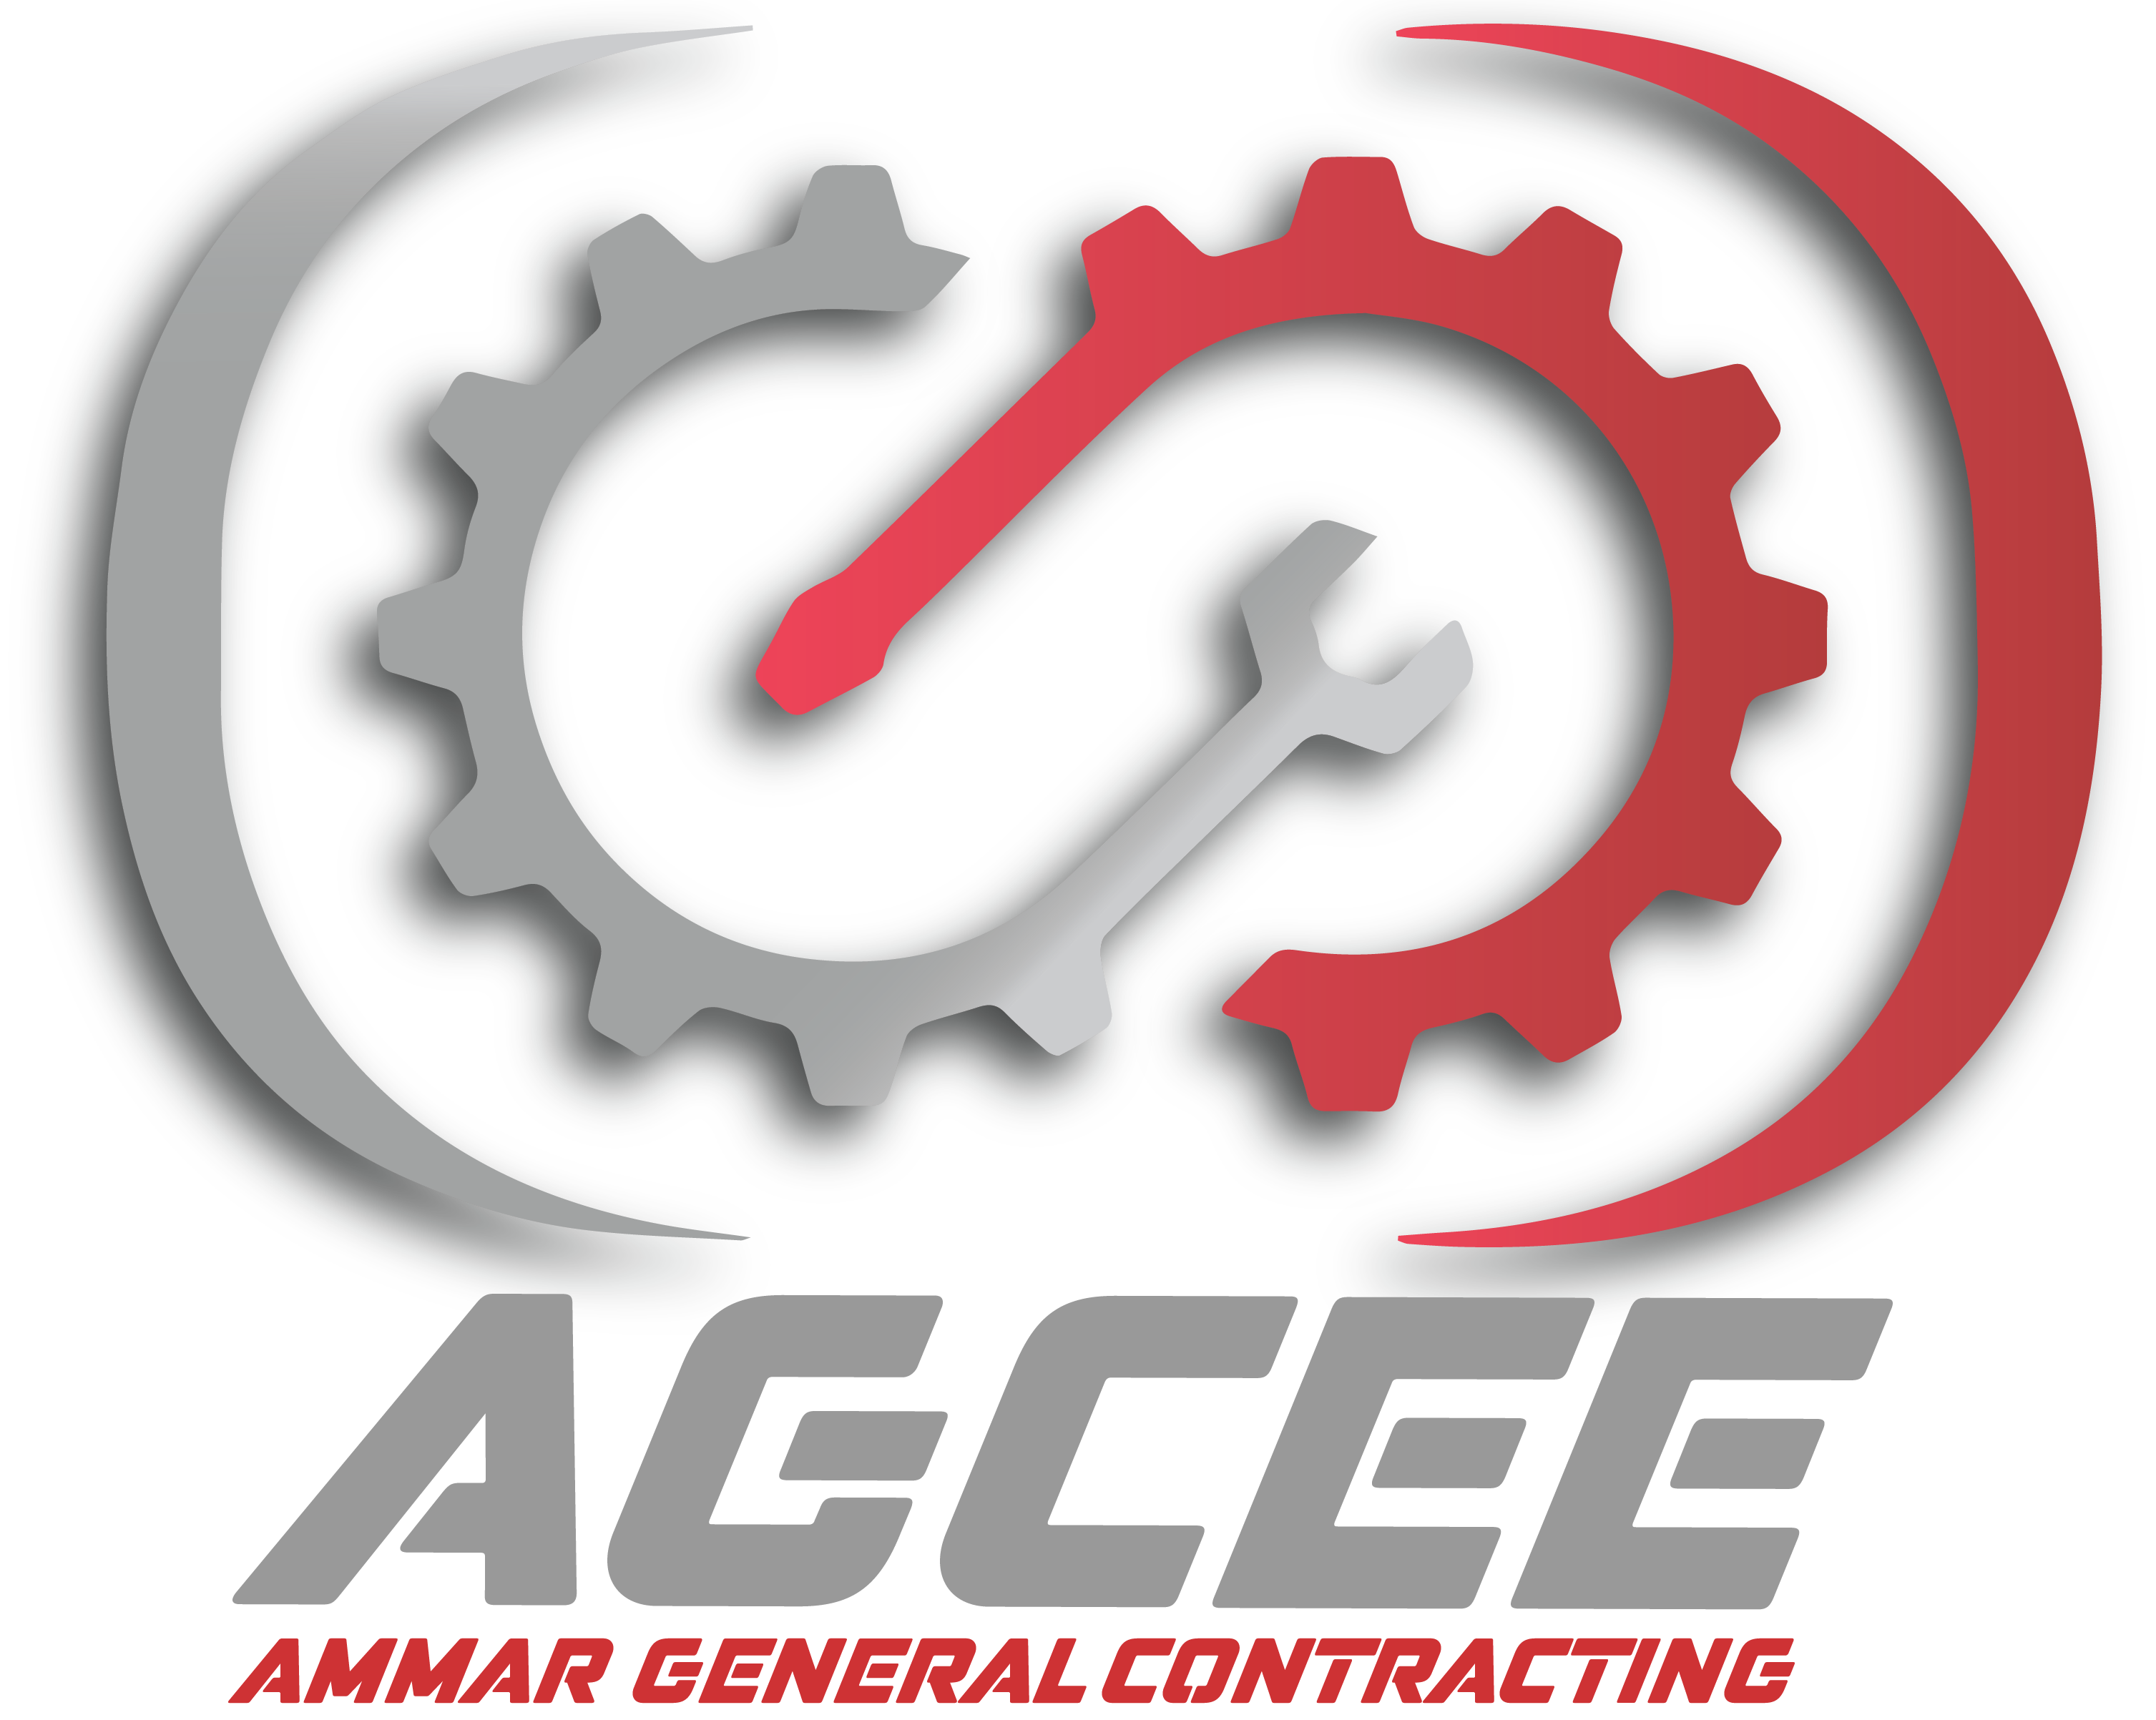 Ammar General Contracting